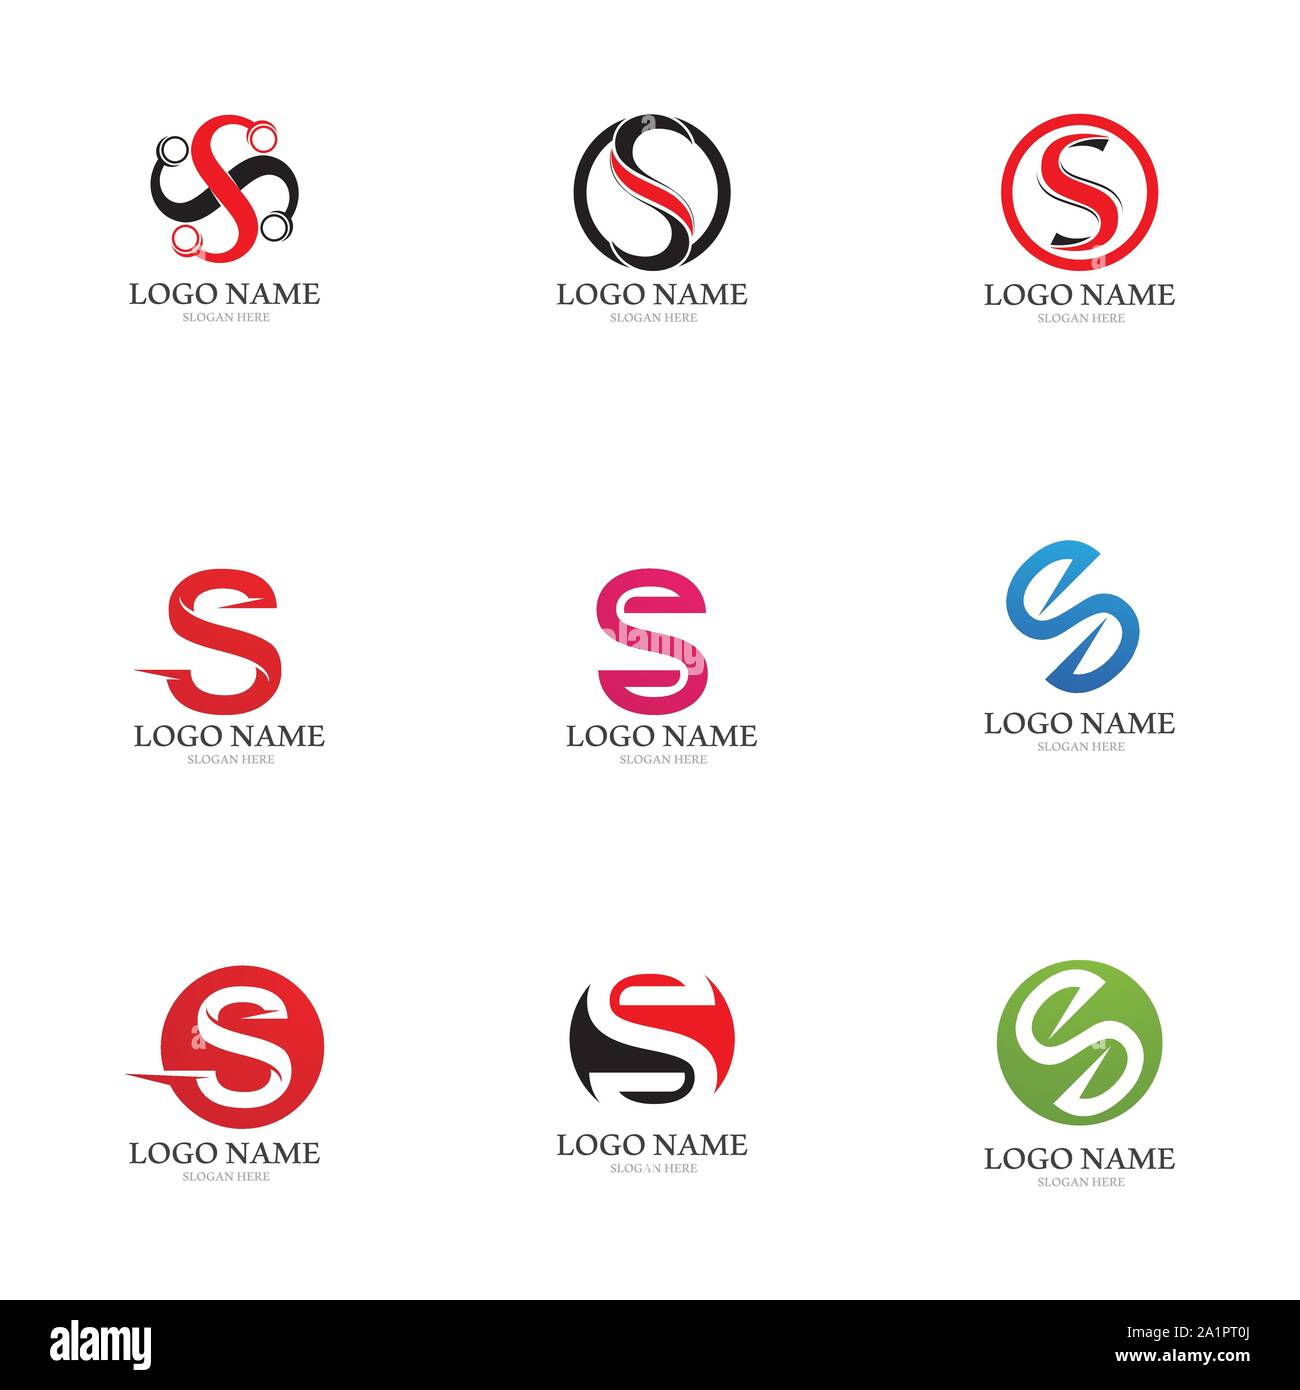 Clothing Logo Design for SSS (logo) Street. Swag. Style by AbodyPro | Design  #7972677